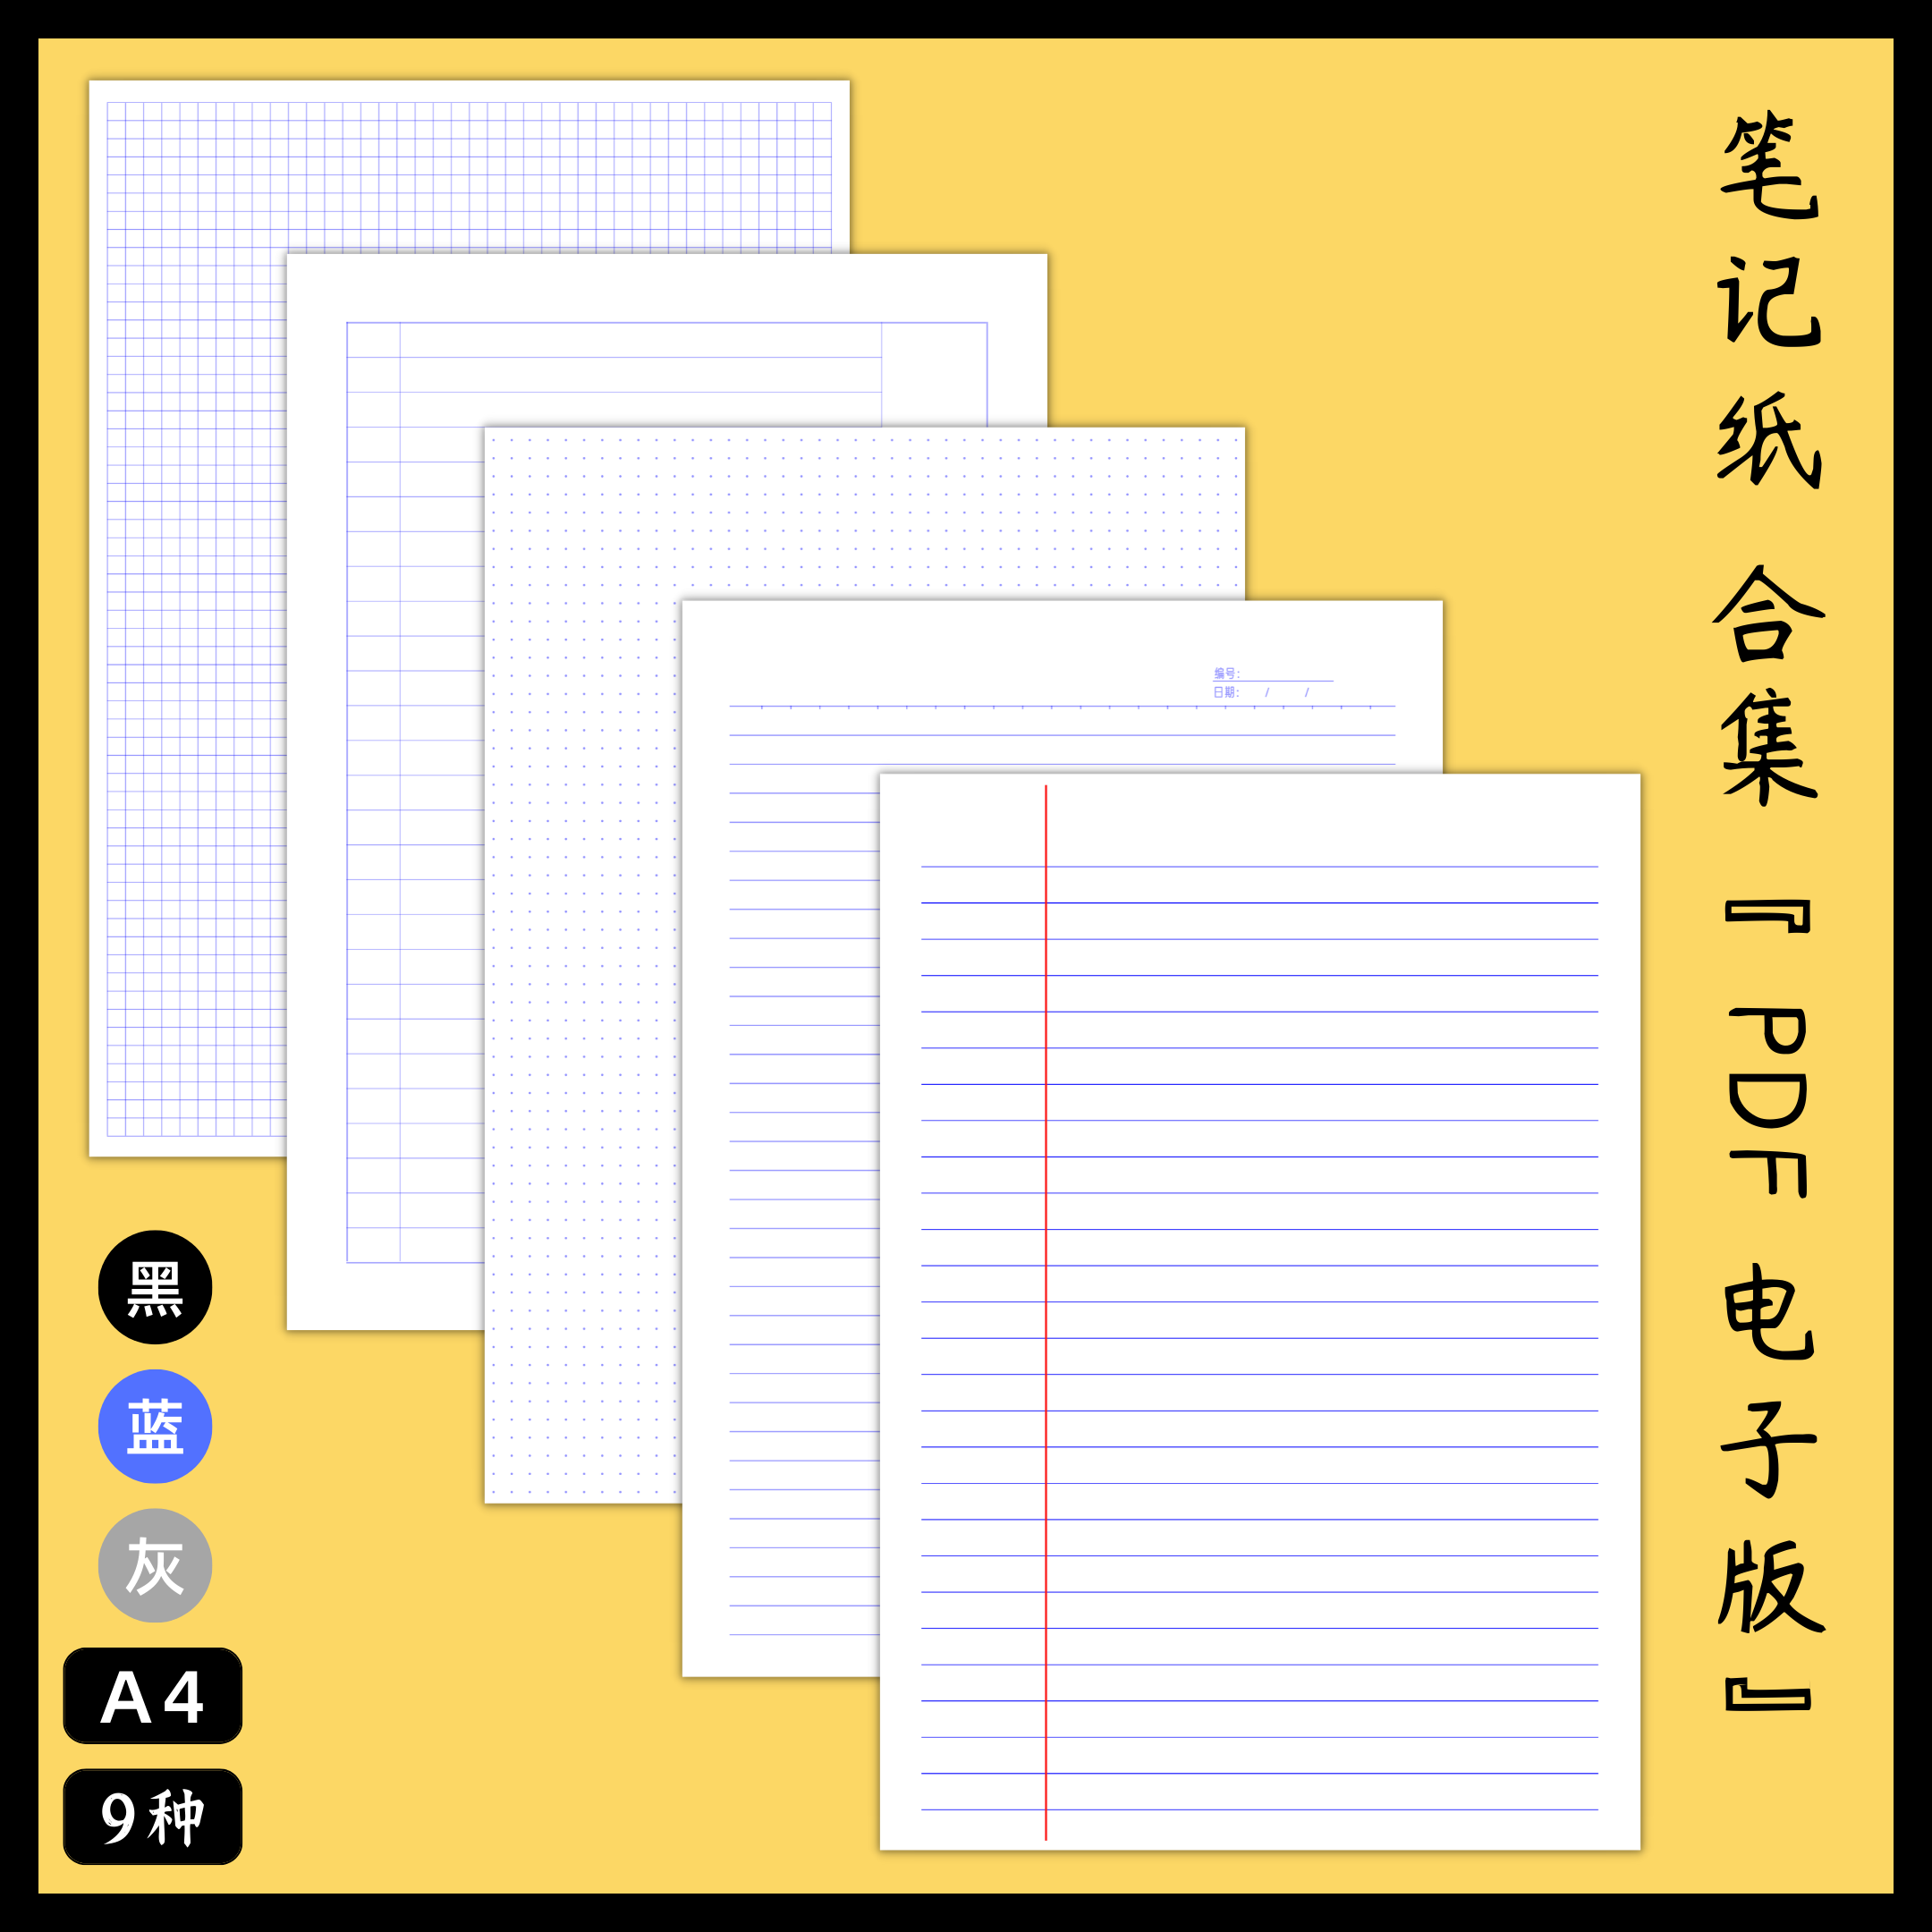 A4行线条格横线纸电子版笔记纸PDF格式模板打印素材